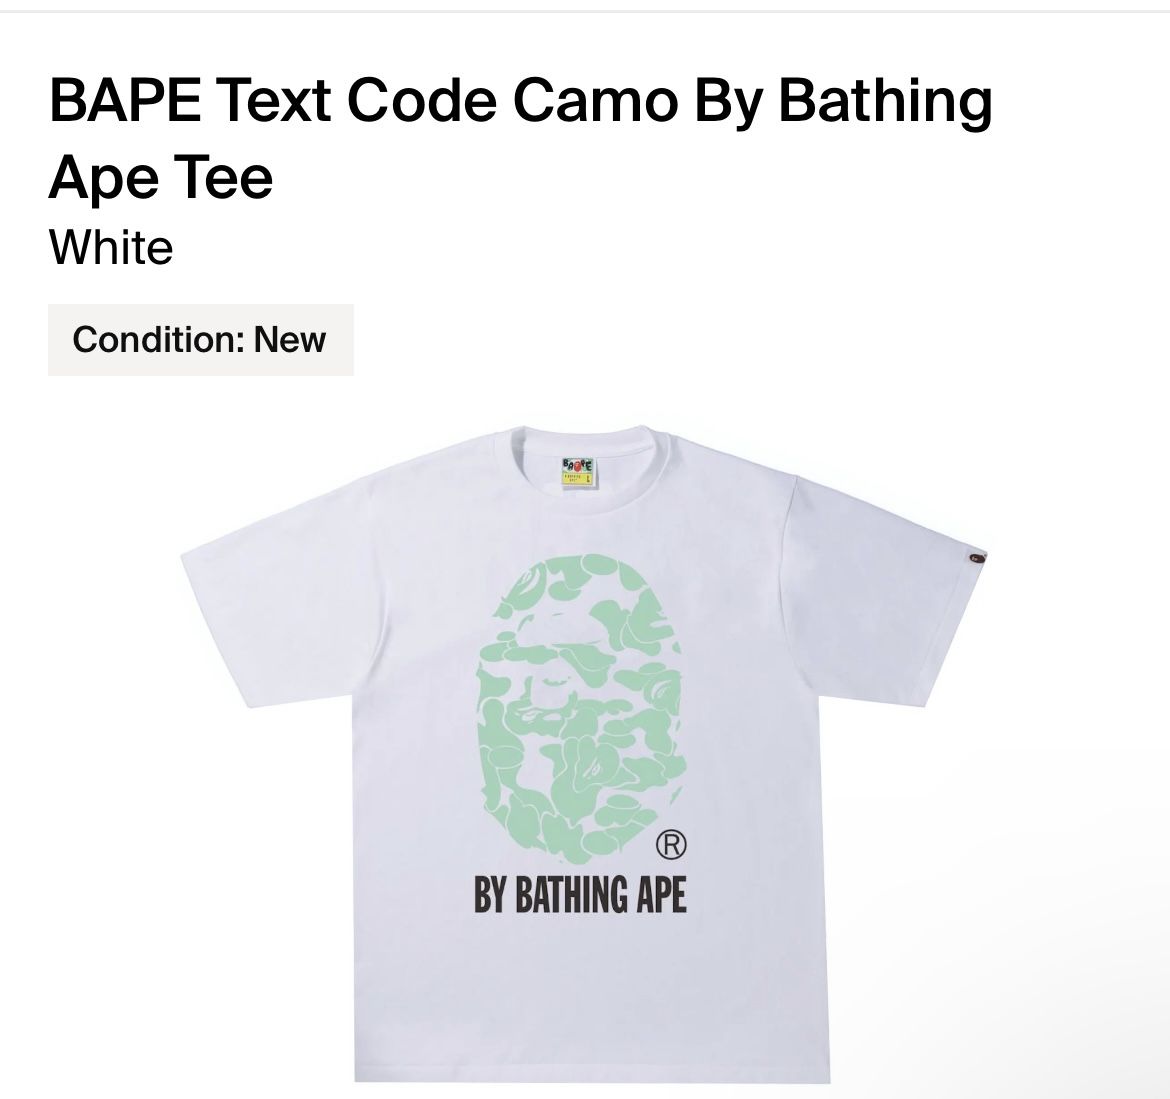 BAPE Text Code Camo By Bathing Ape Tee